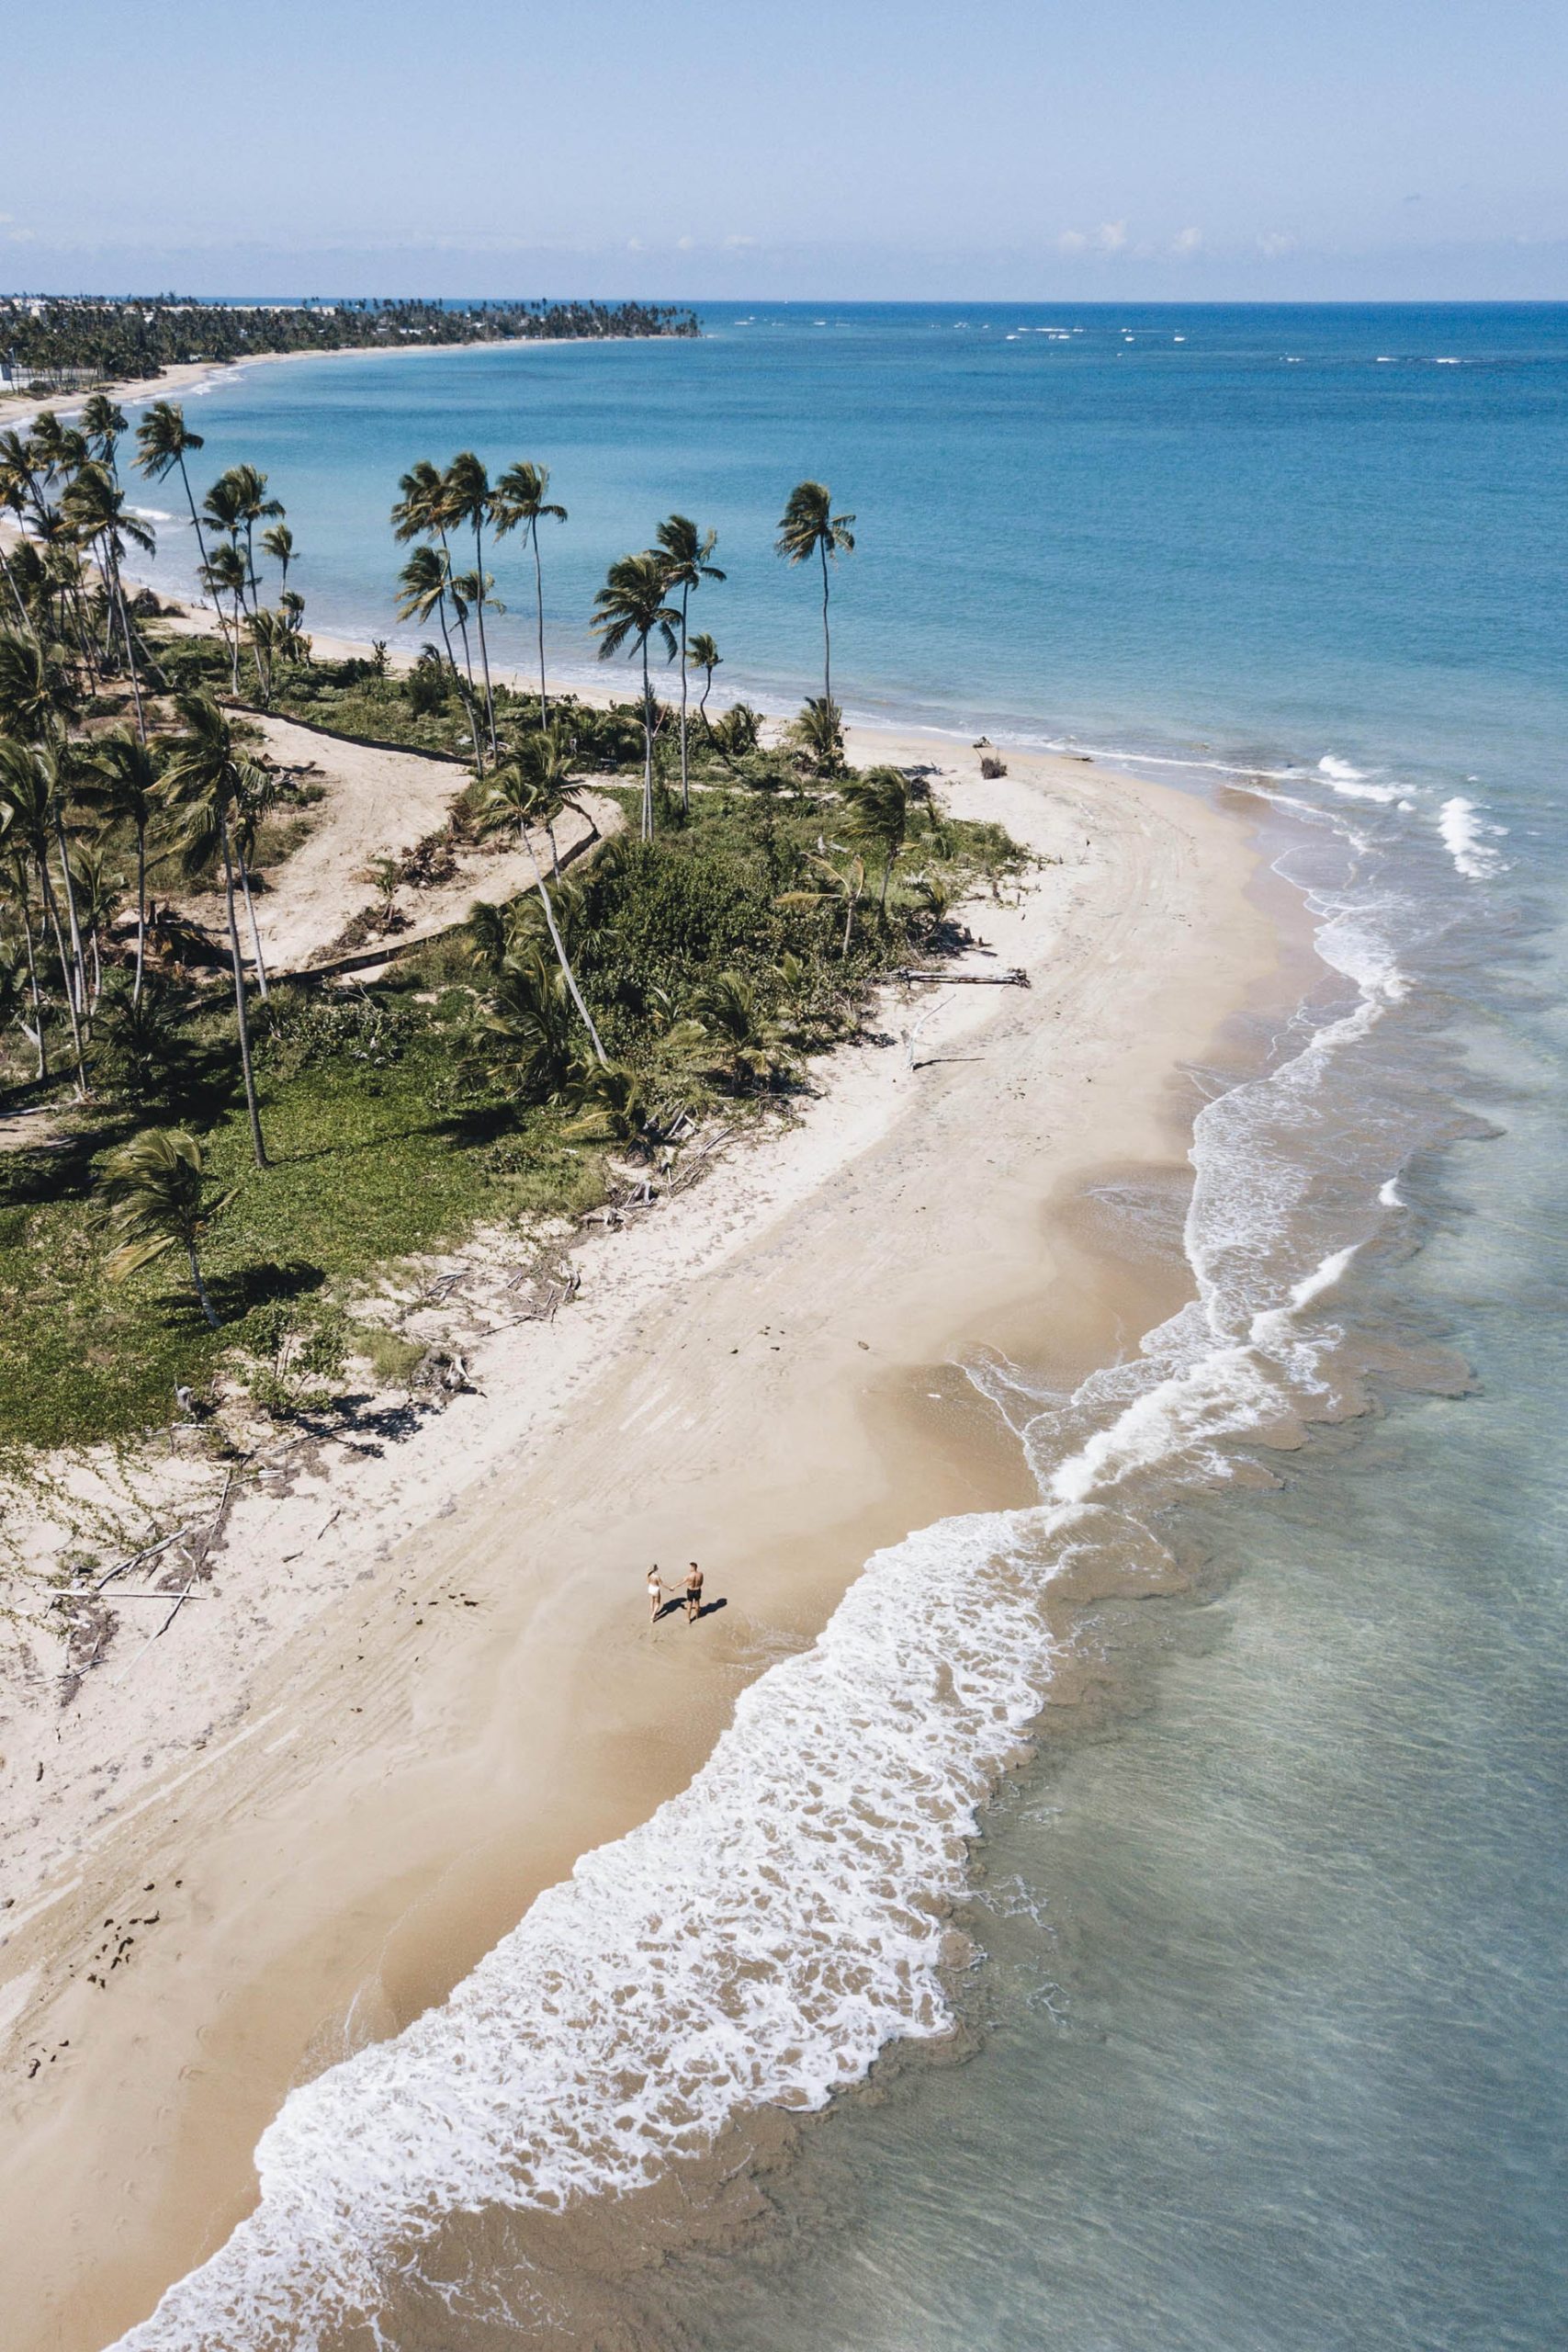 The St. Regis Bahia Beach Resort – Rio Grande, Puerto Rico – Aerial Beach View